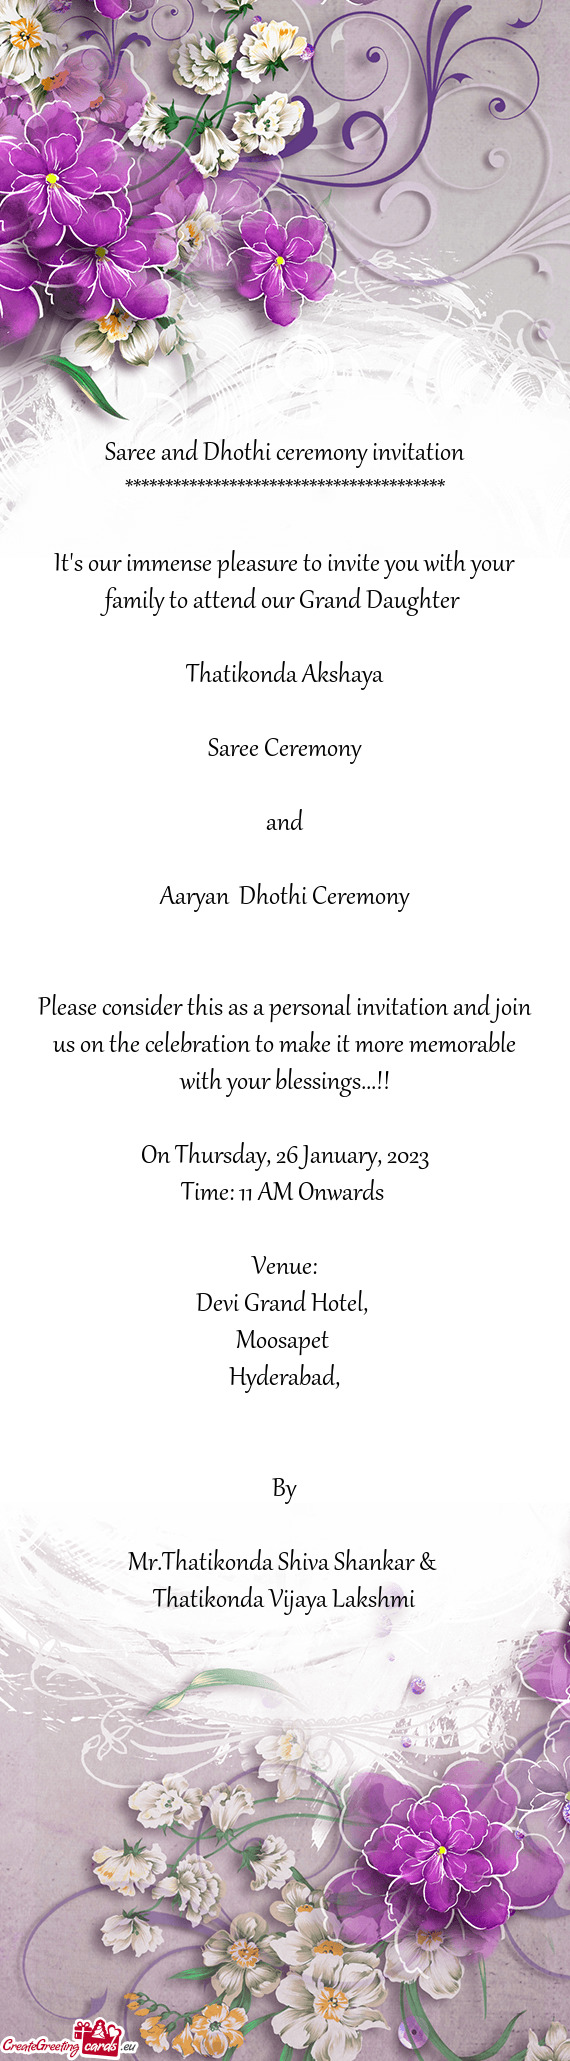 Saree and Dhothi ceremony invitation